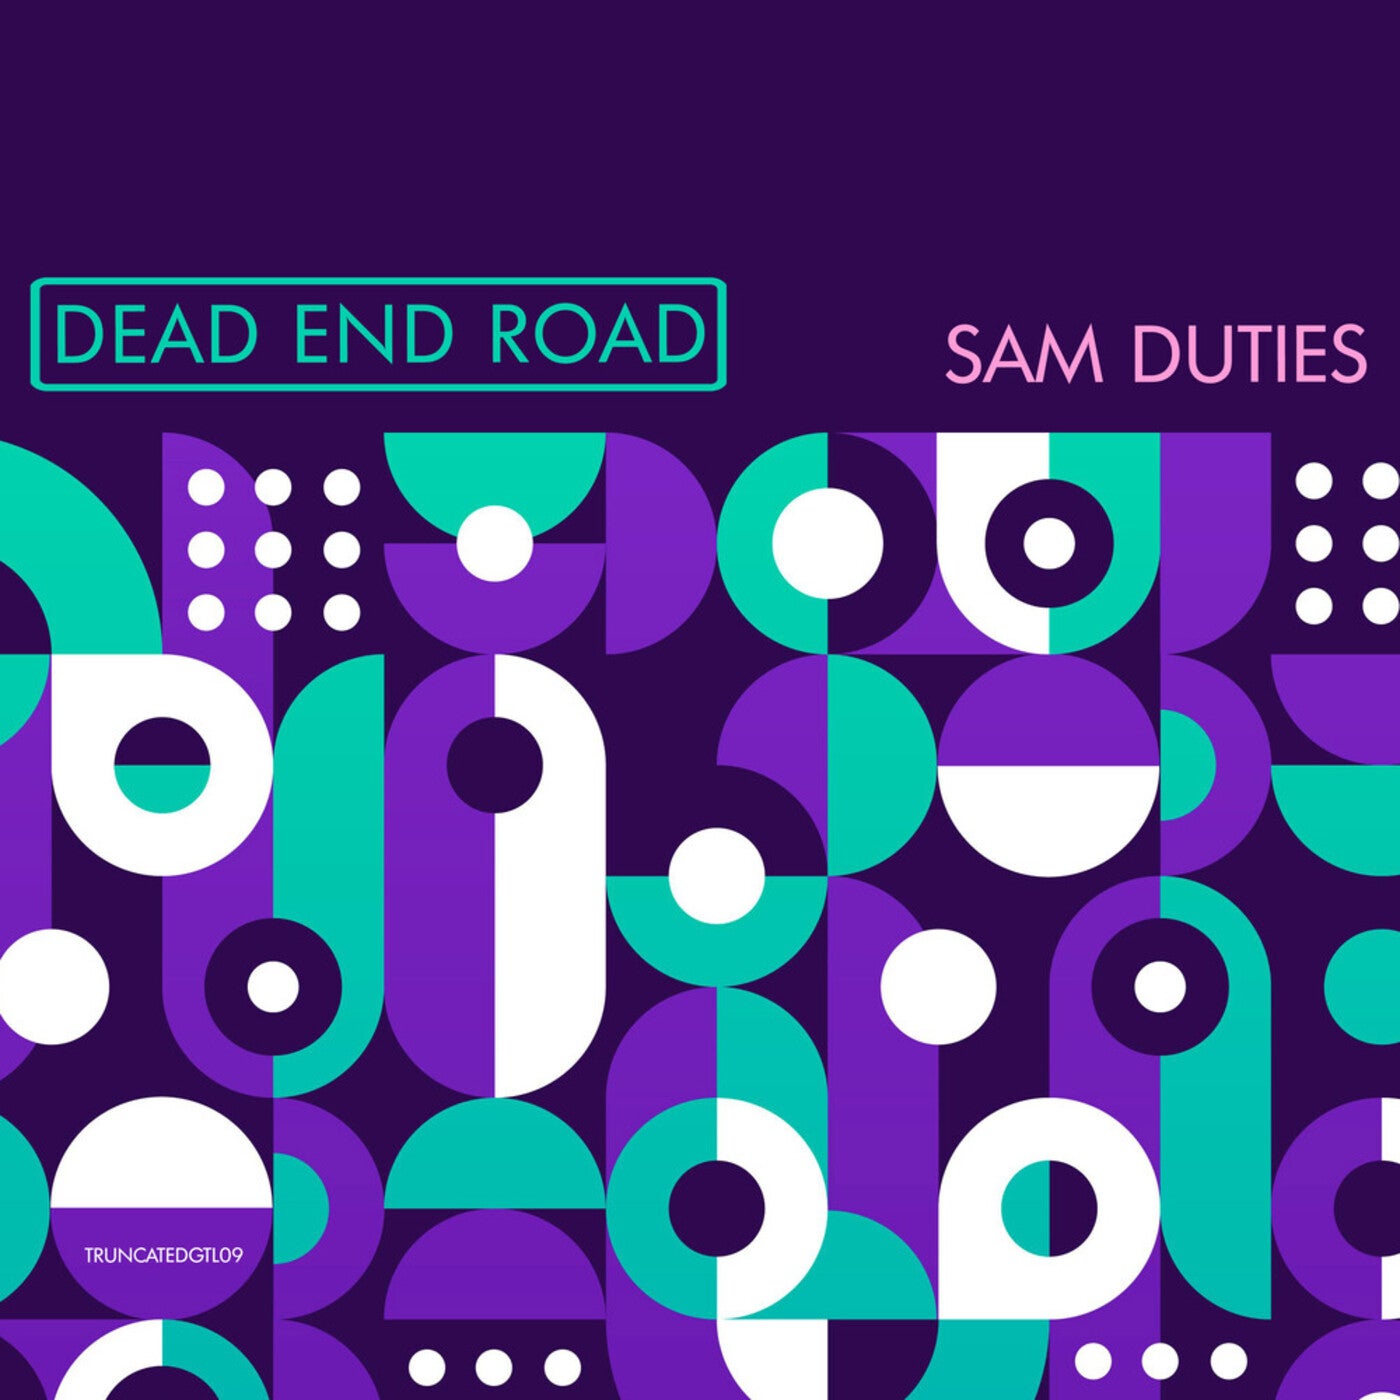 Sam Duties – Dead End Road [TRUNCATEDGTL09]